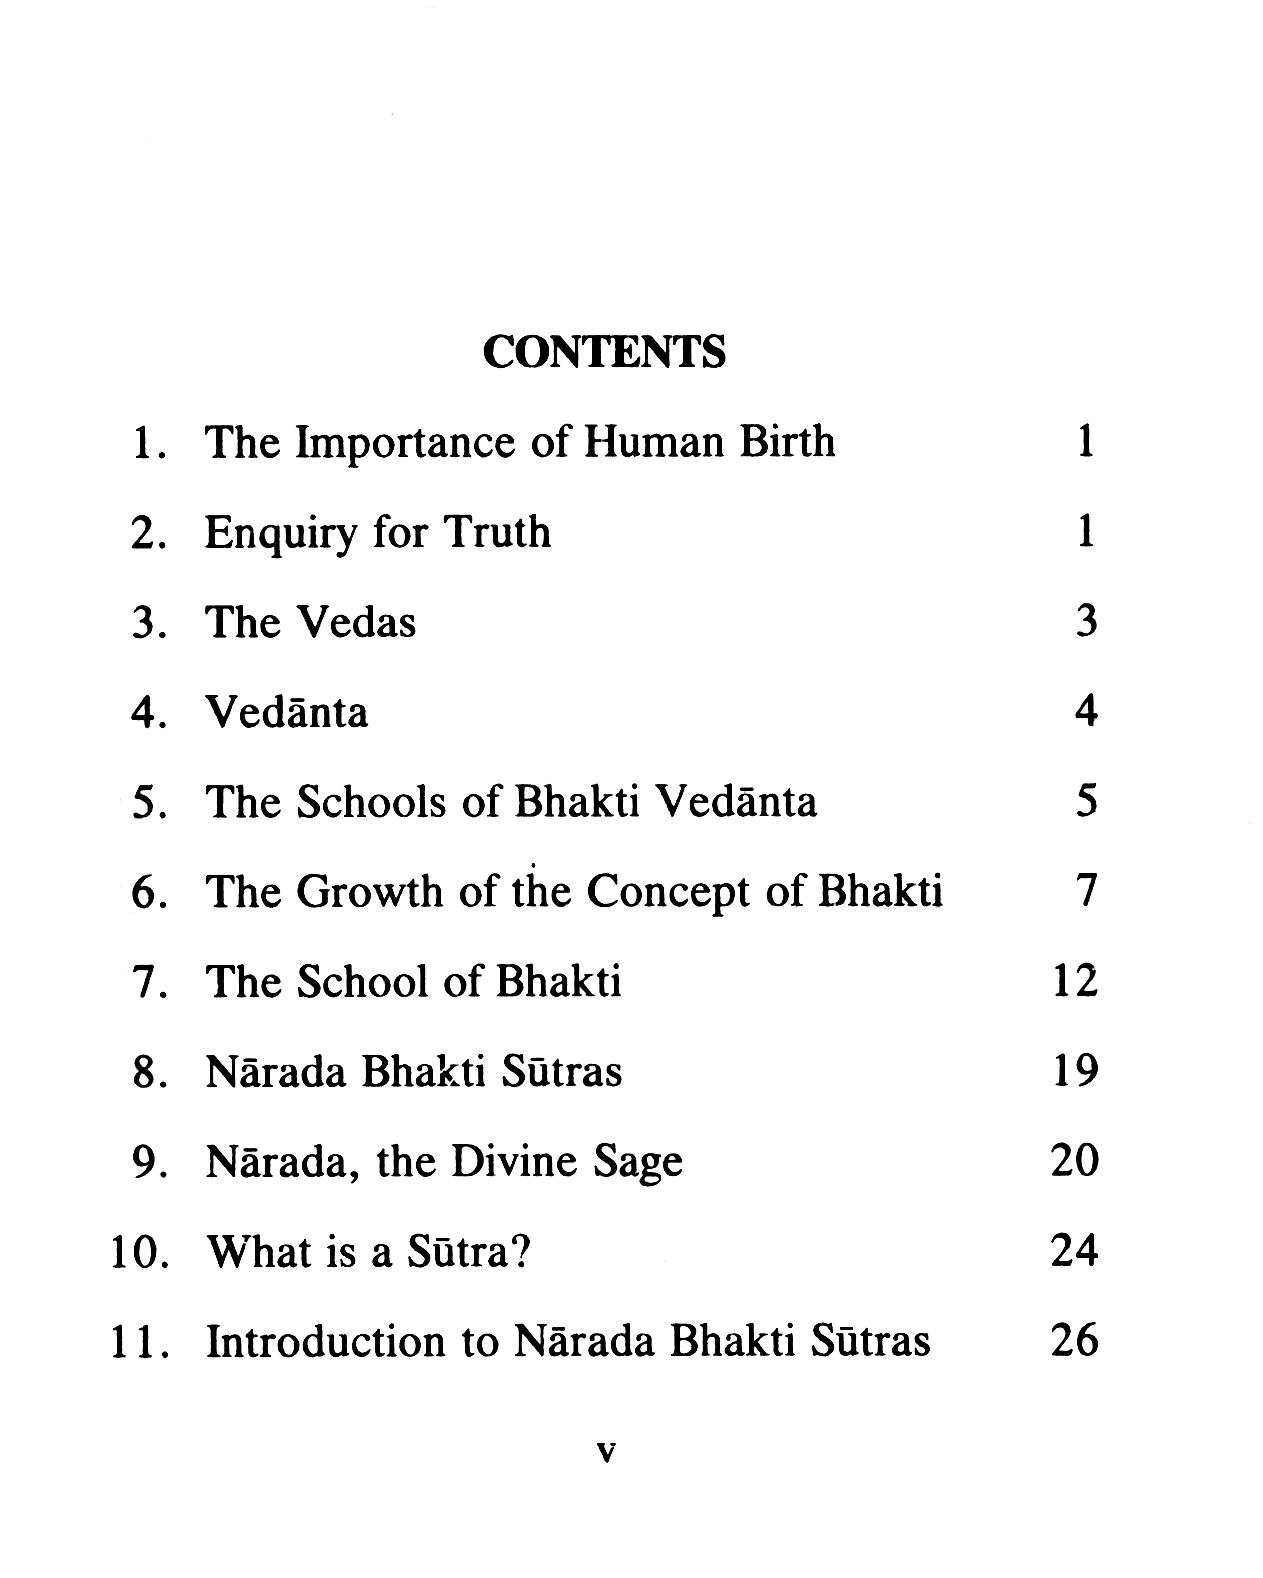 Narada Bhakti Sutras - A Study